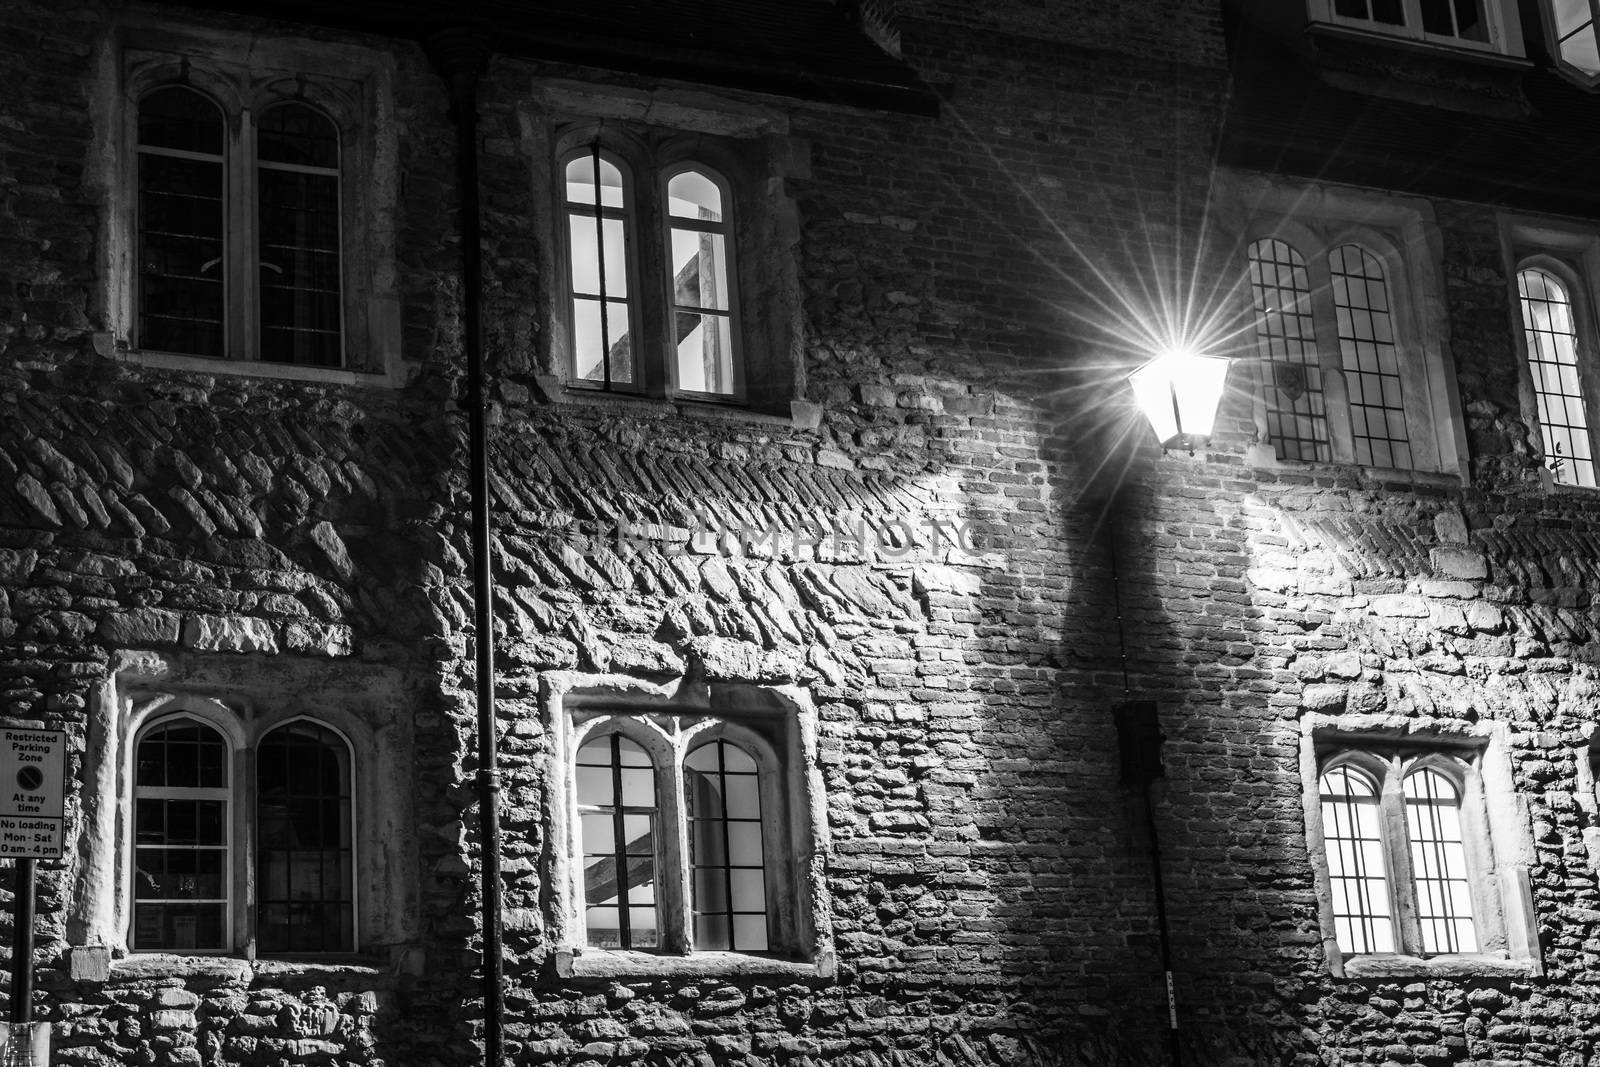 Illuminated windows in Trinity Lane by night, Cambridge, UK by mauricallari